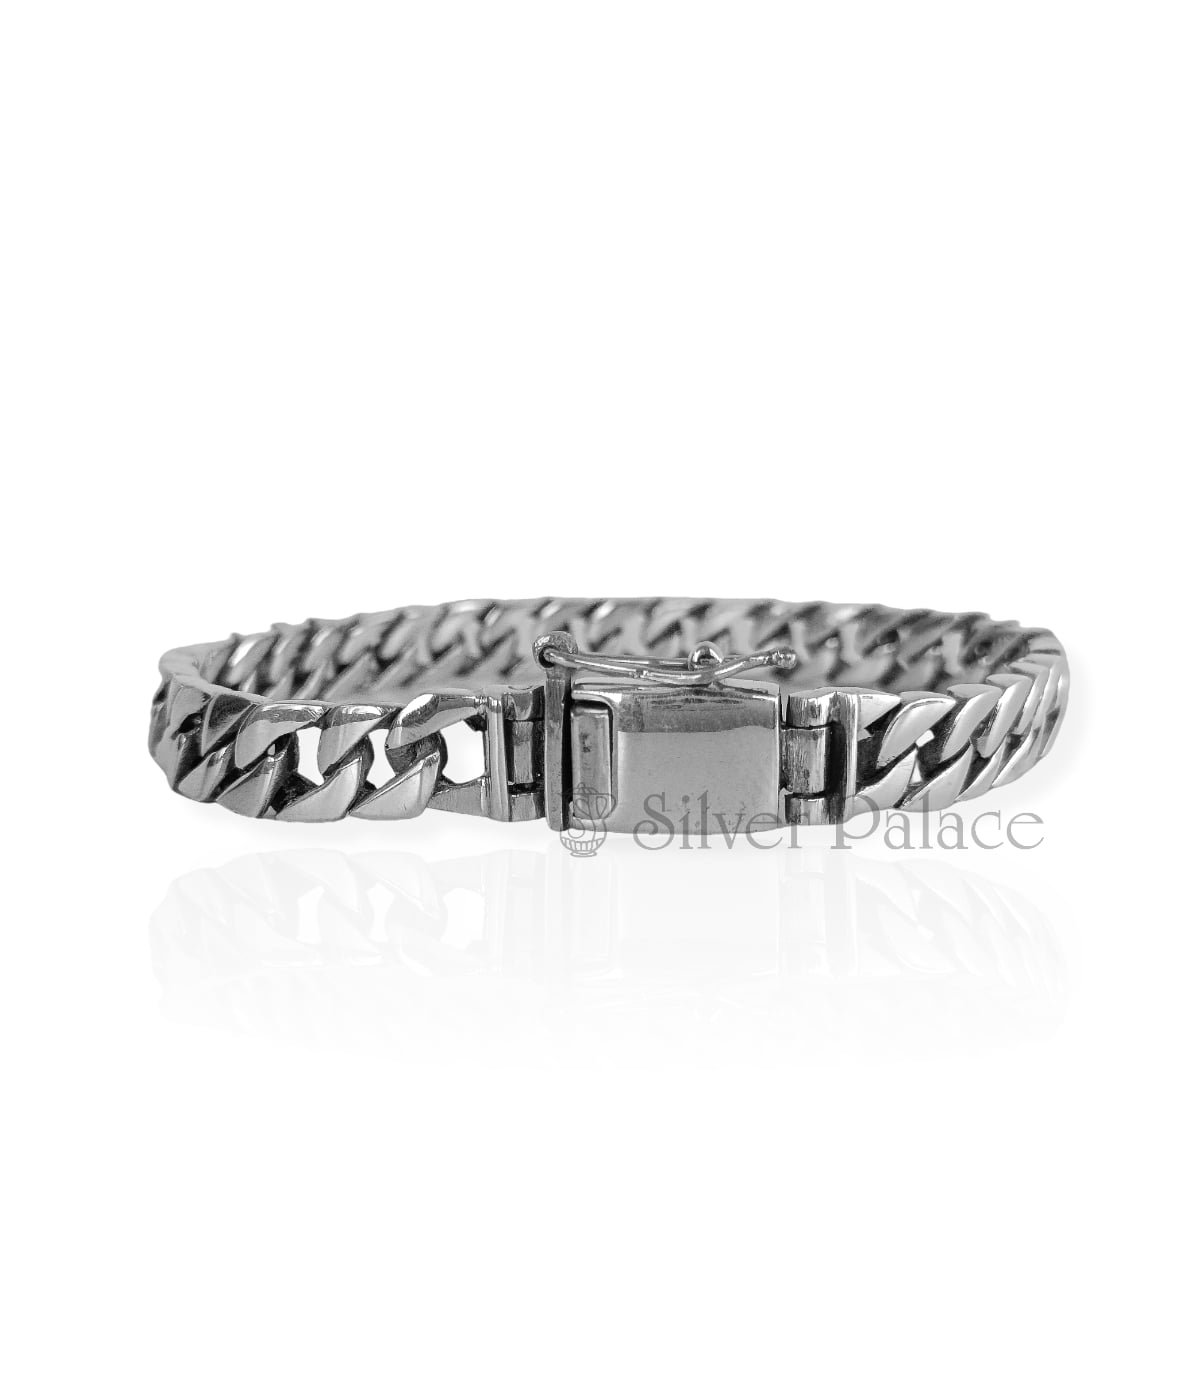 Stainless Steel Sterling Silver Bracelet